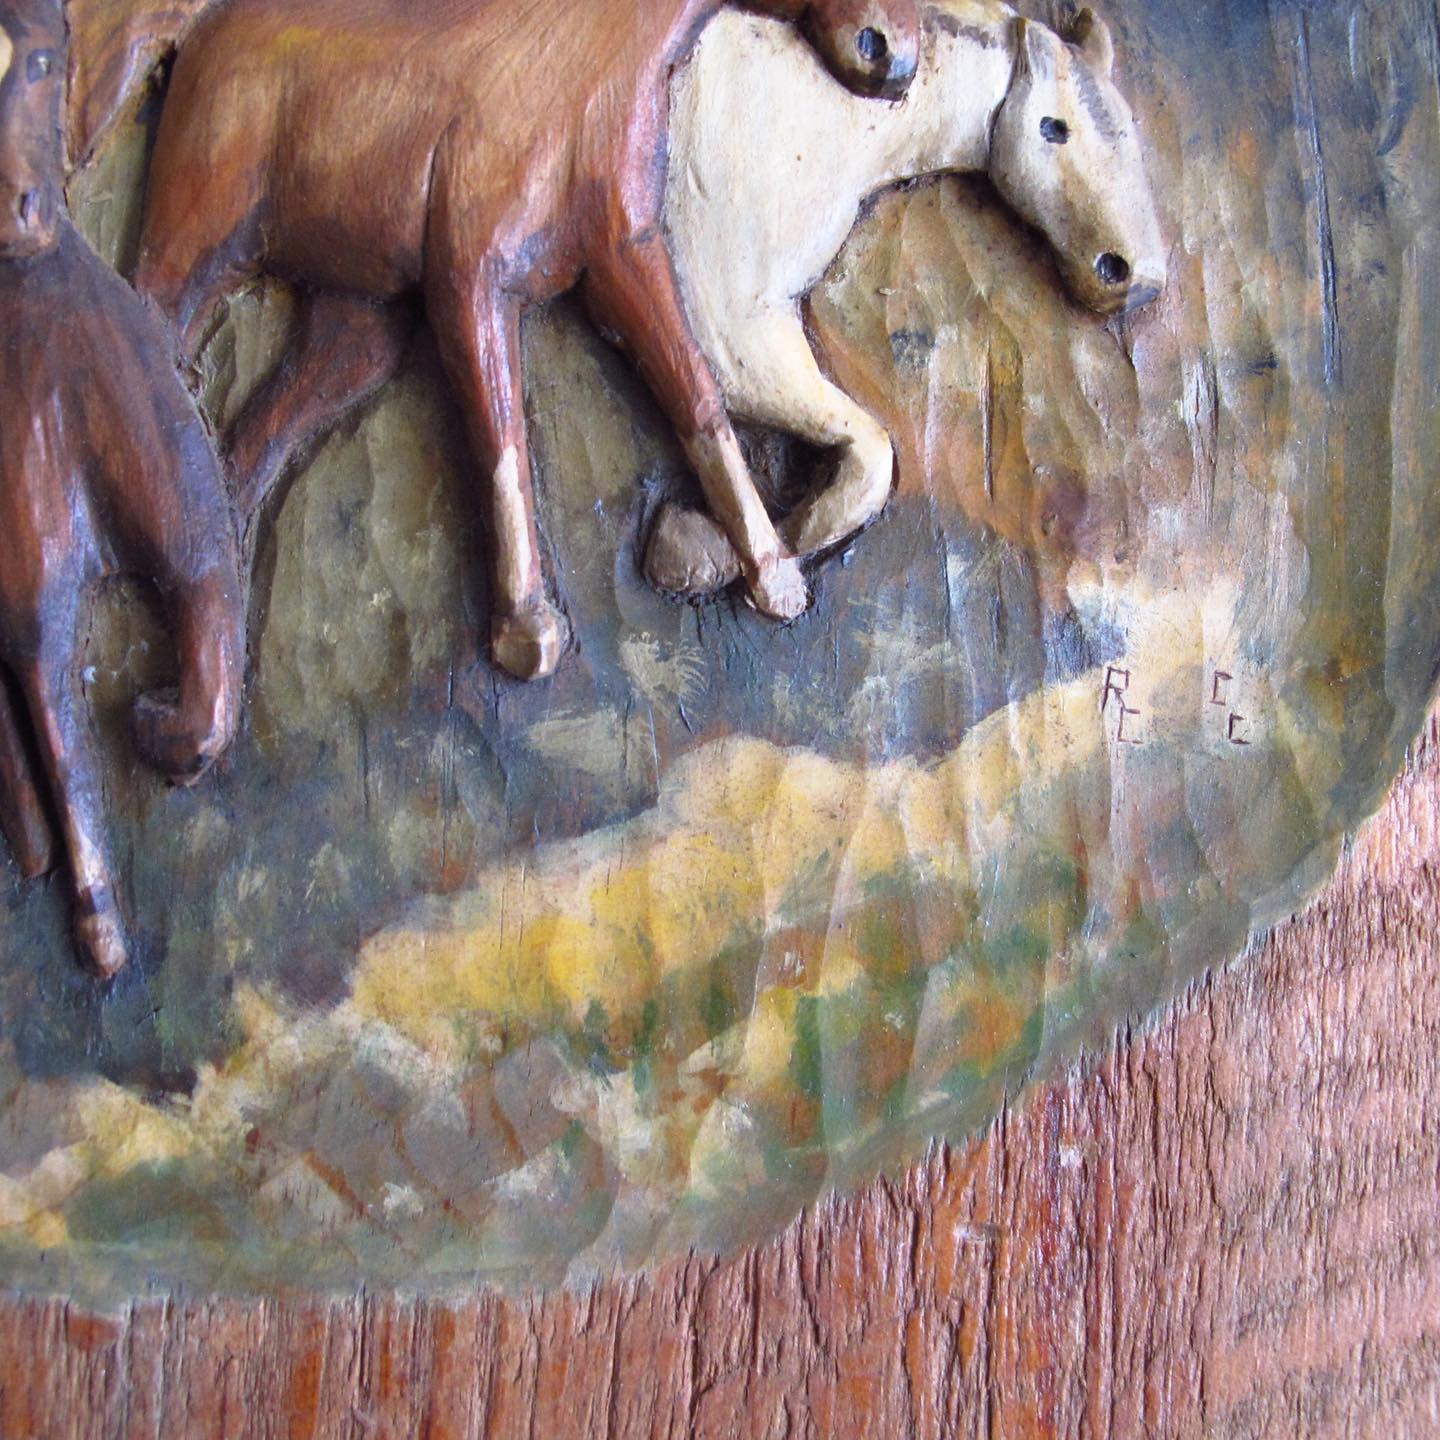 Polychrome Wild Horse Handcarved American Folk Art Wooden Relief, c. 1940